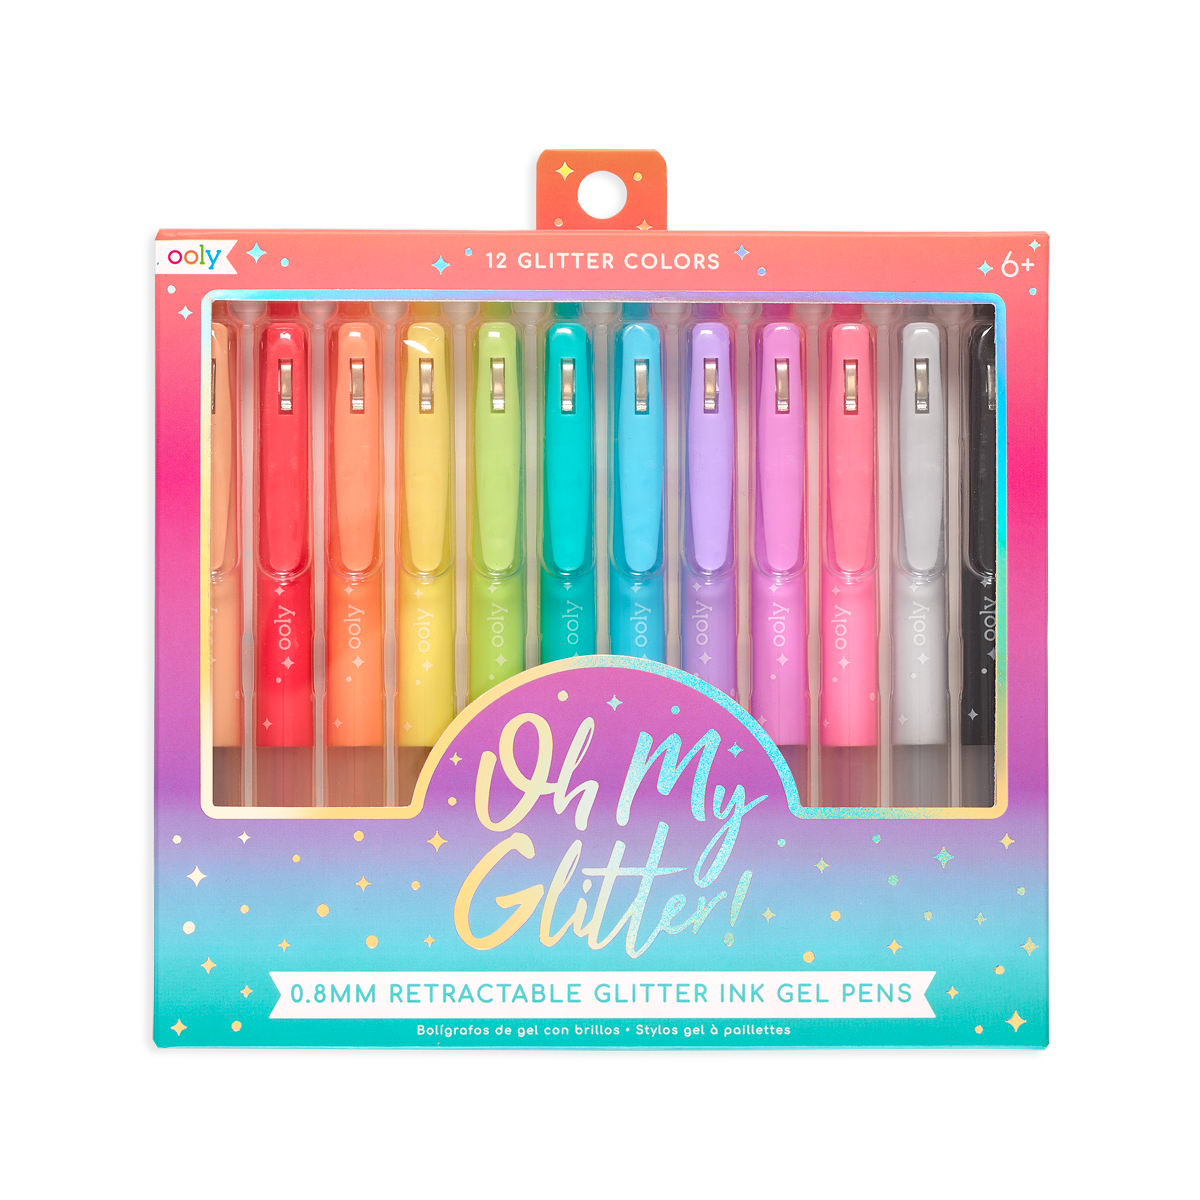 Ooly Glitter Scented Gel Pens